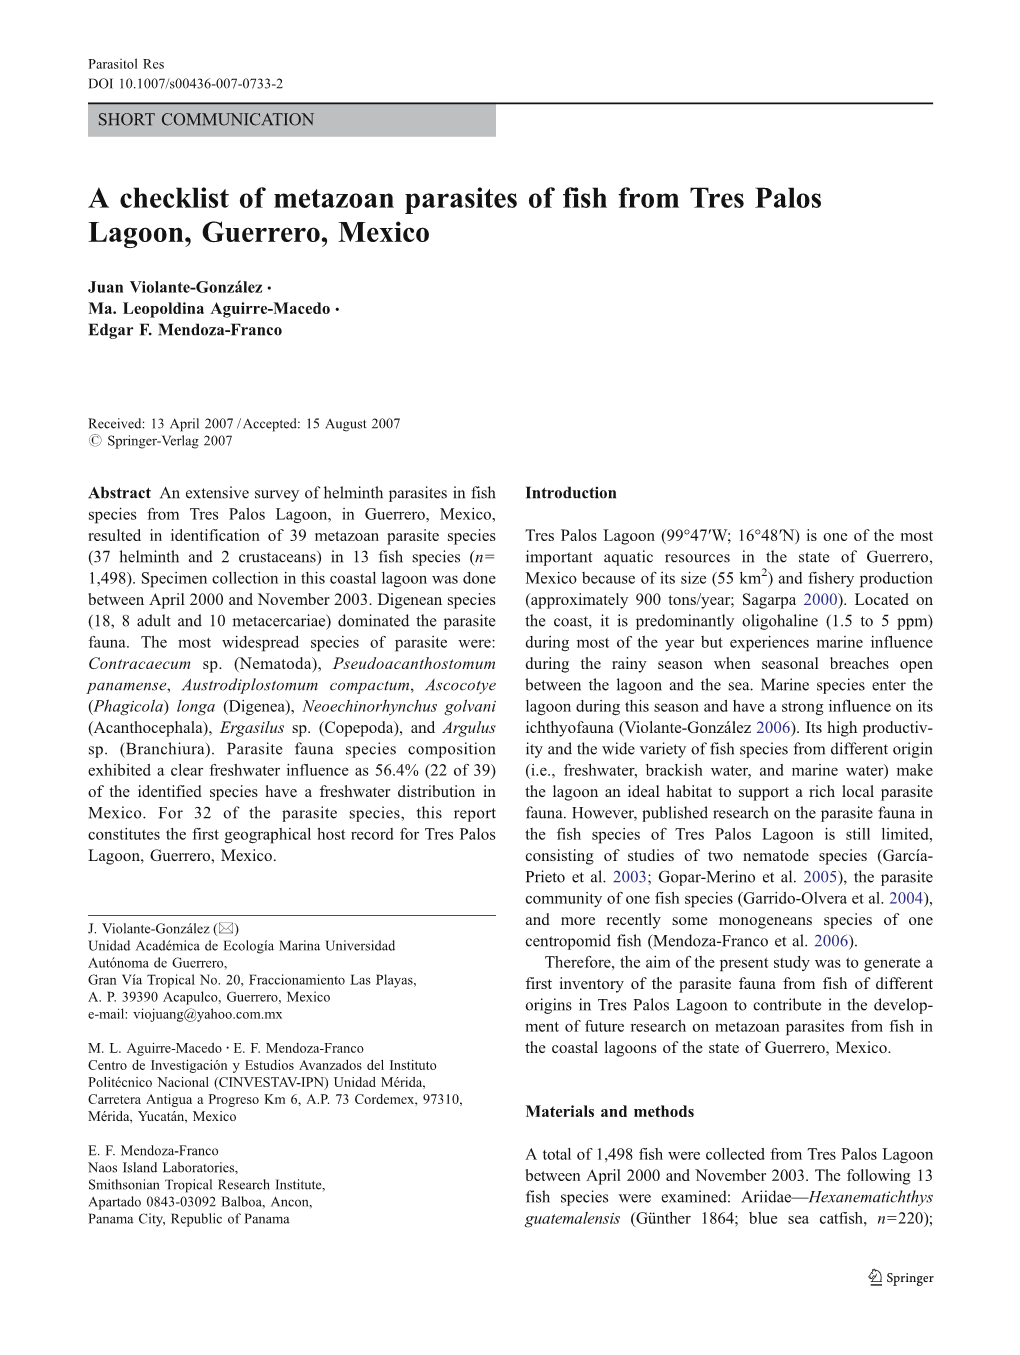 A Checklist of Metazoan Parasites of Fish from Tres Palos Lagoon, Guerrero, Mexico